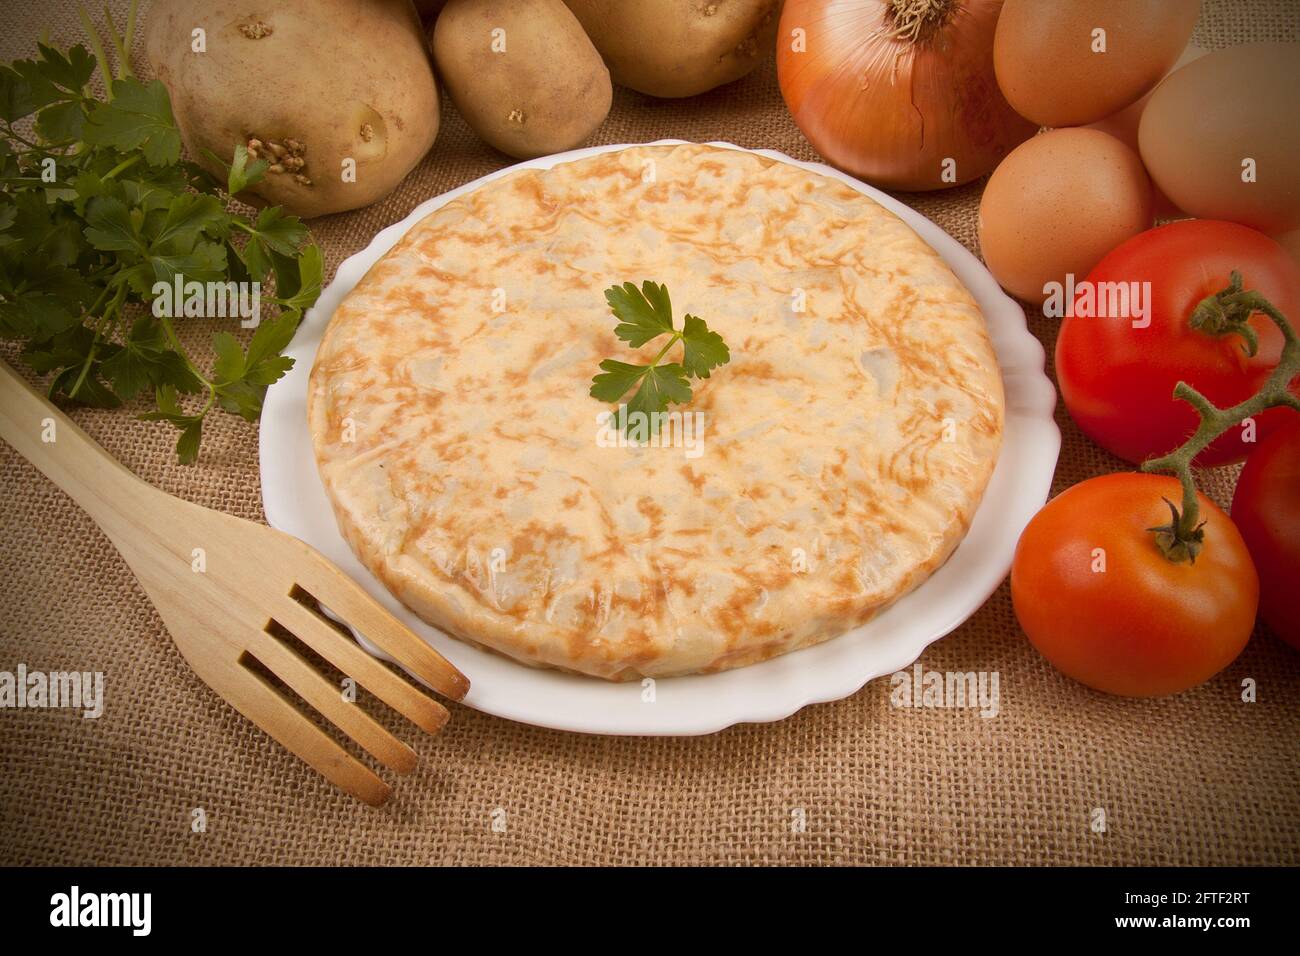 spanish potato omelette Stock Photo